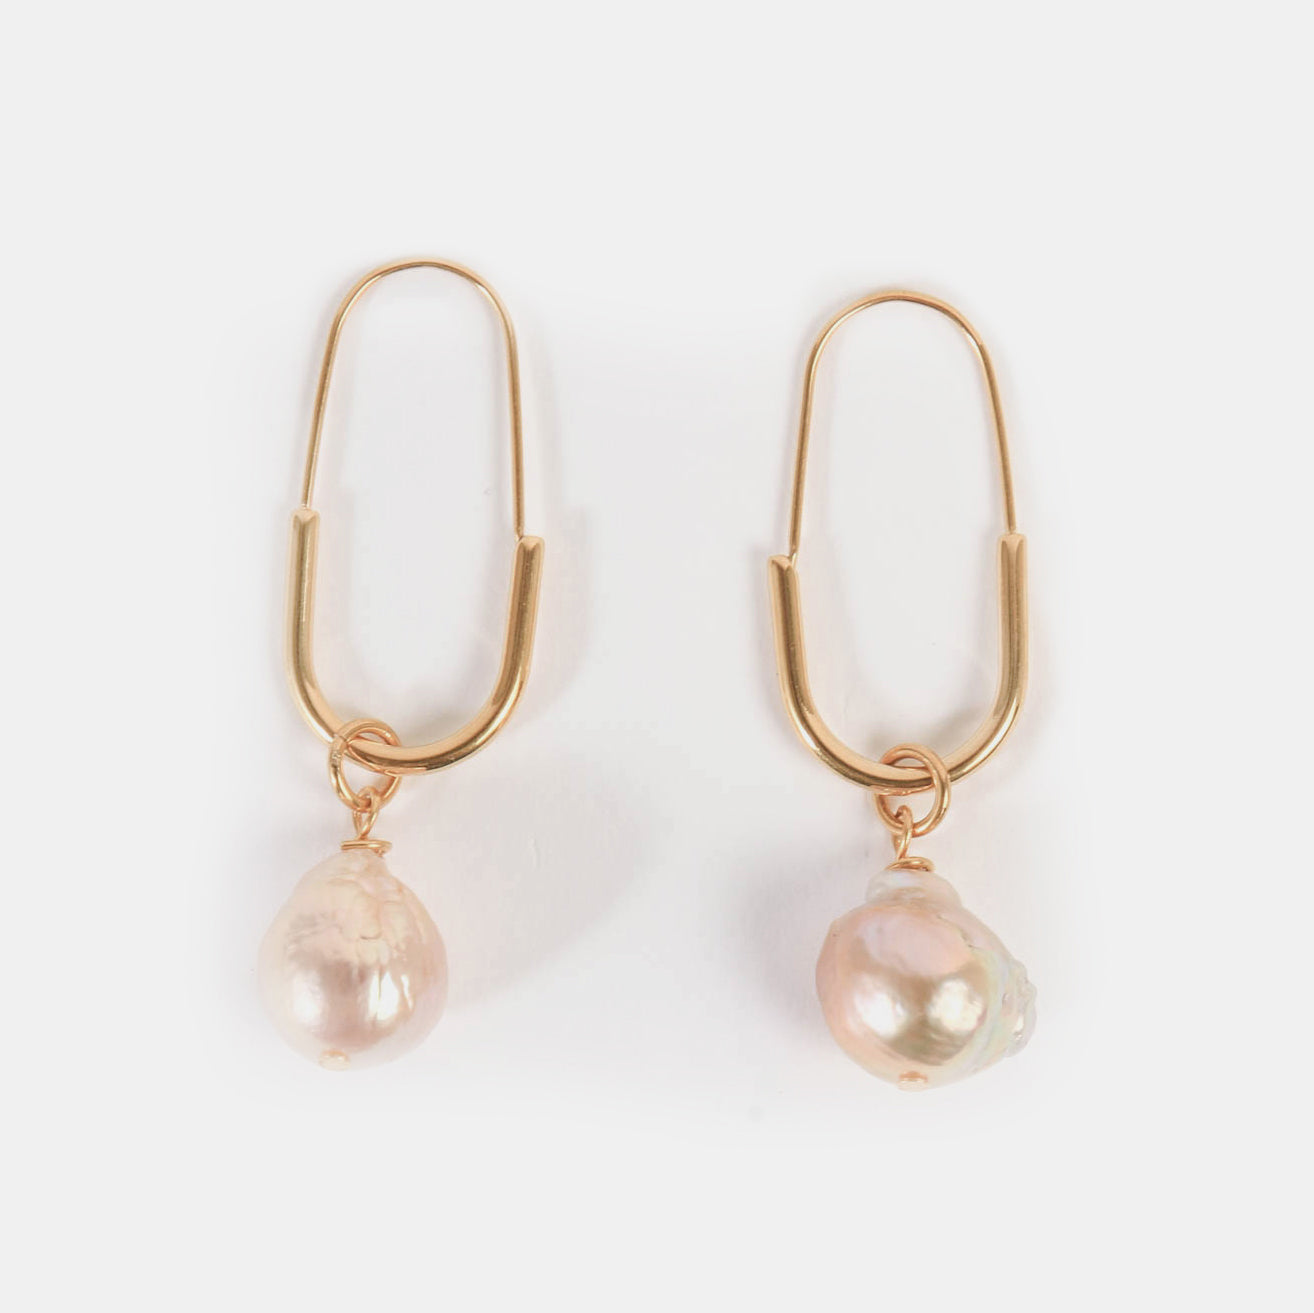 Dina gold earrings